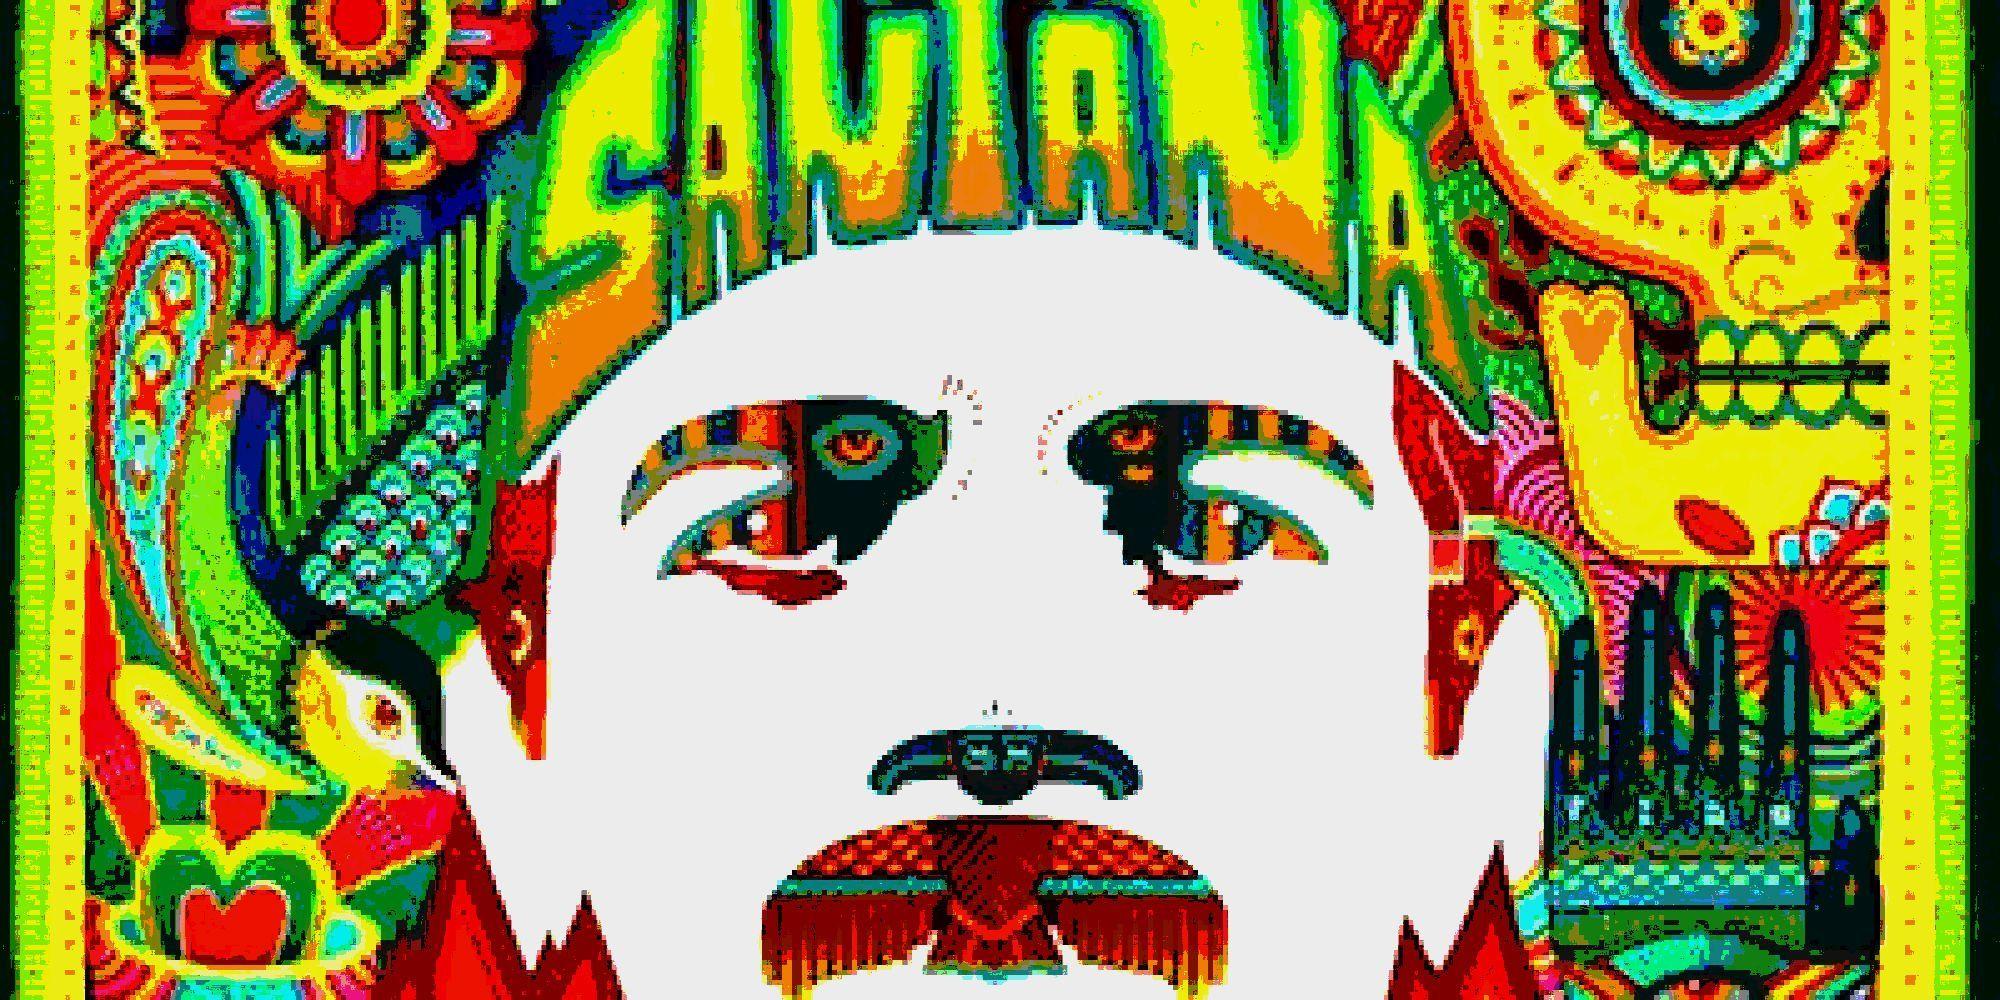 SANTANA latin rock blues chicano hard jazz pop poster psychedelic